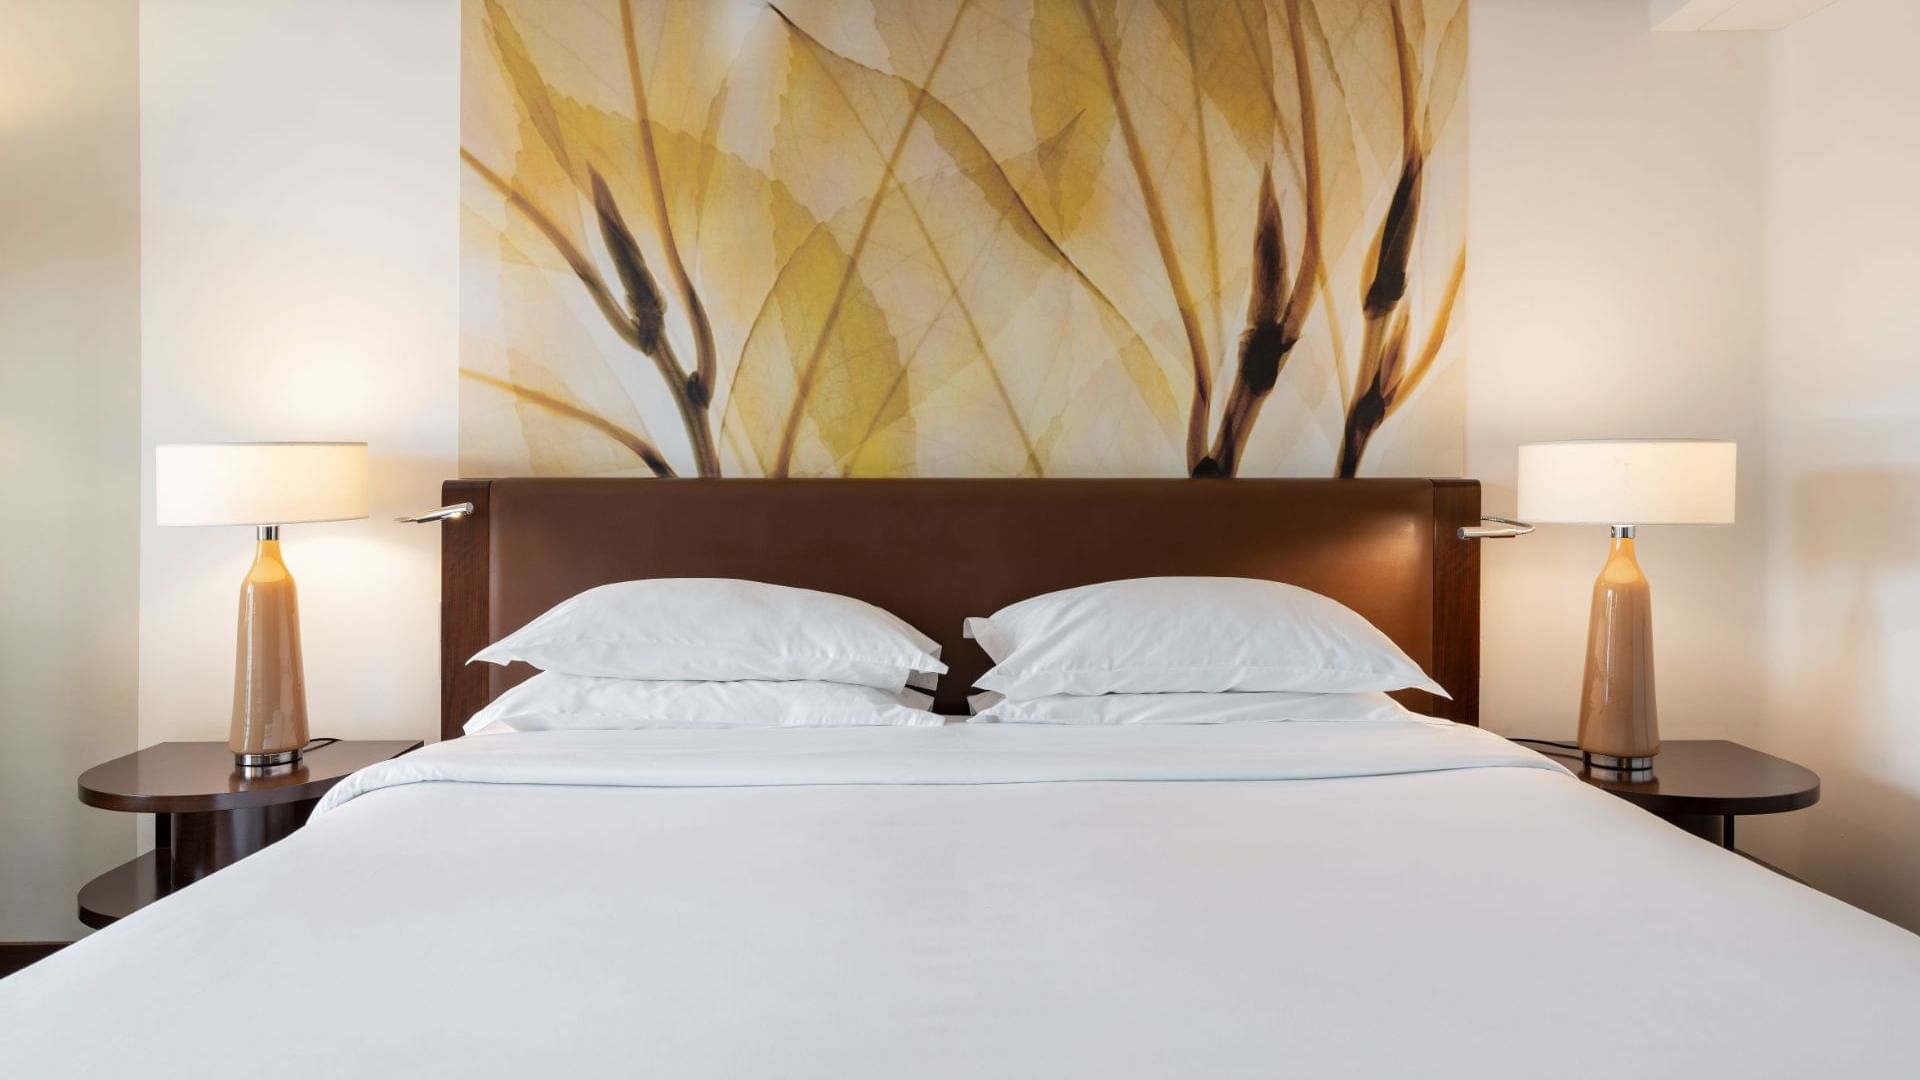 Bed & lamps in Superior Garden View Room at Bensaude Hotels